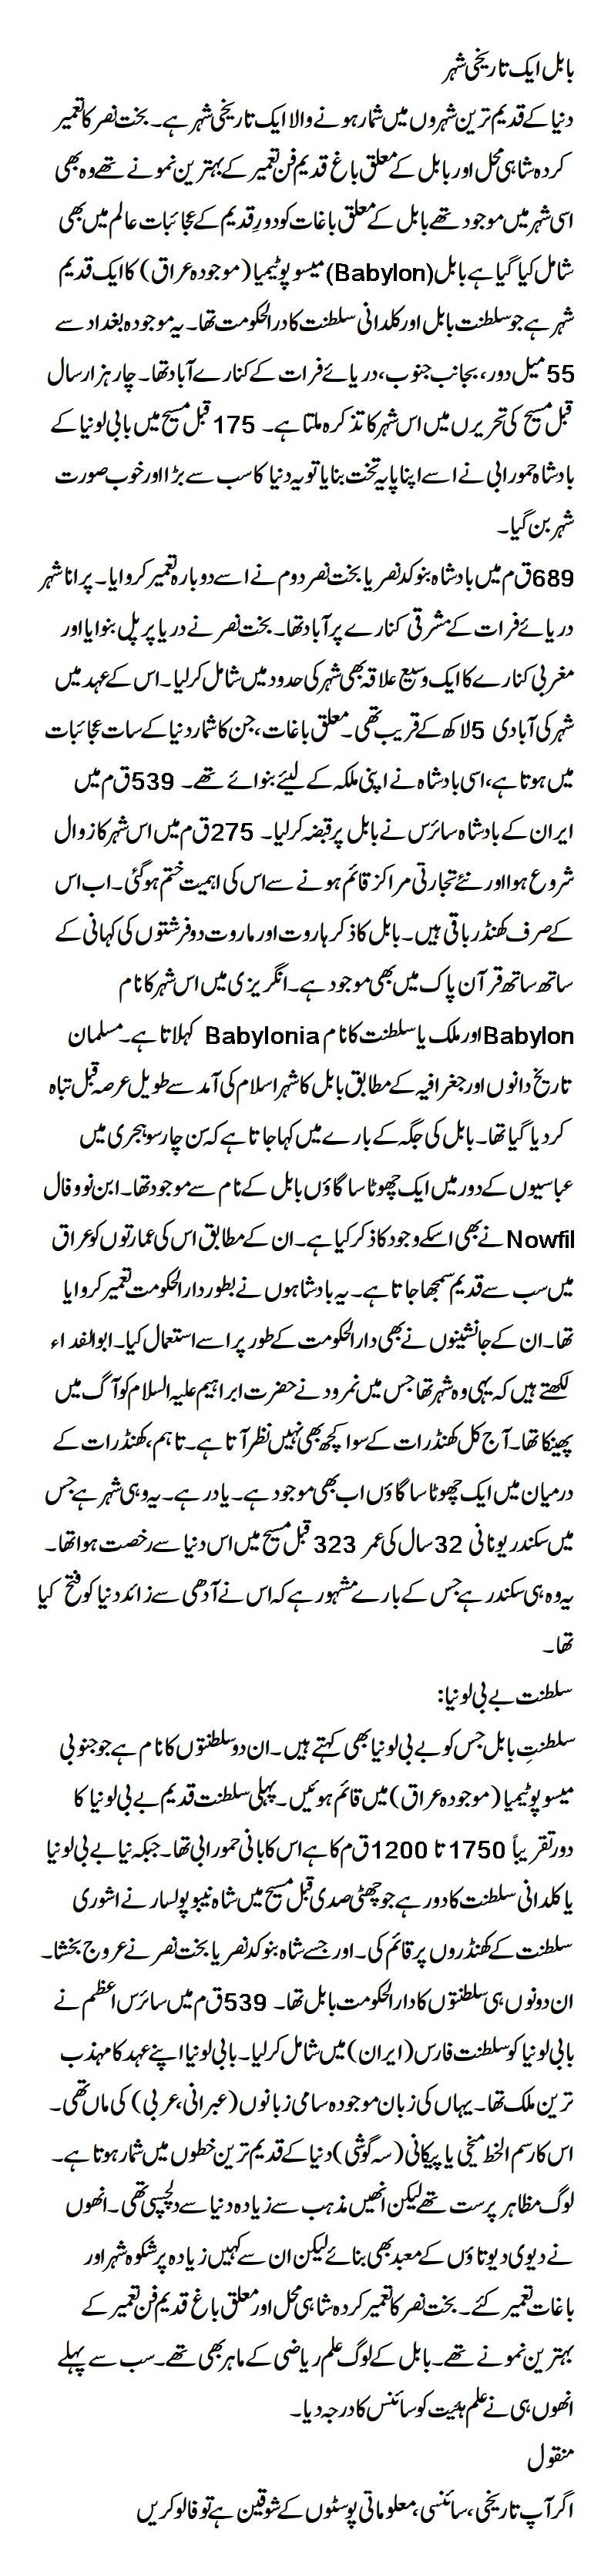 Babylon is a historical city